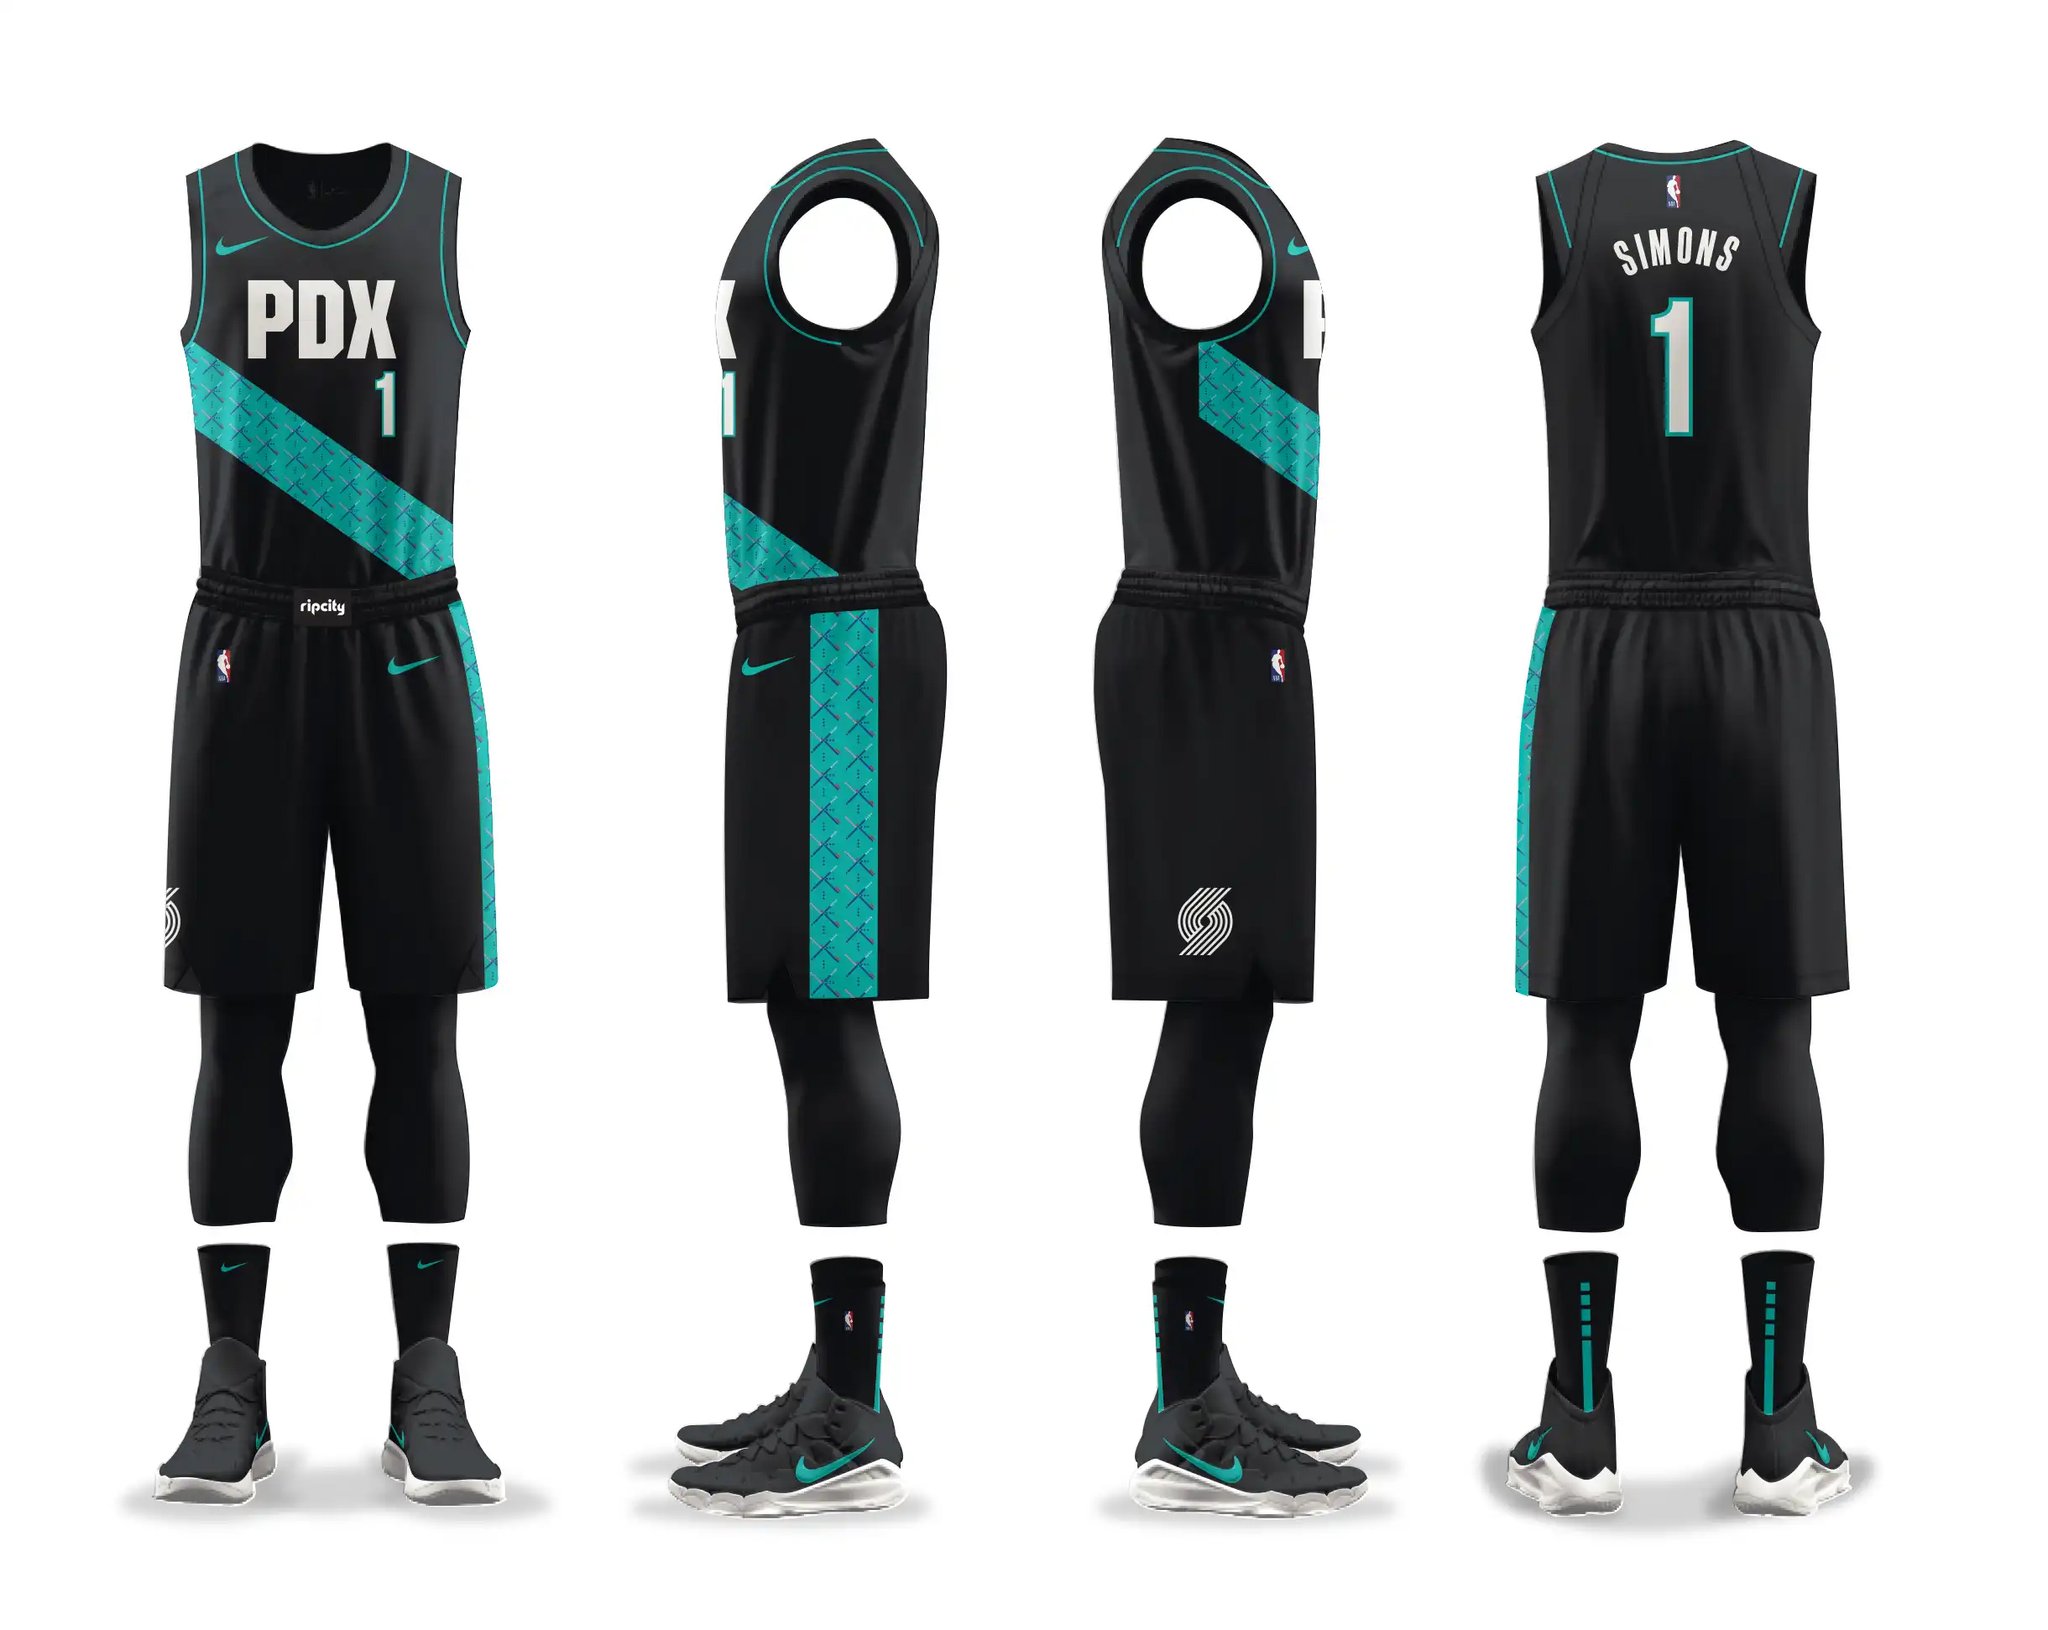 Portland Trail Blazers reveal PDX carpet-inspired city edition uniform, Sports